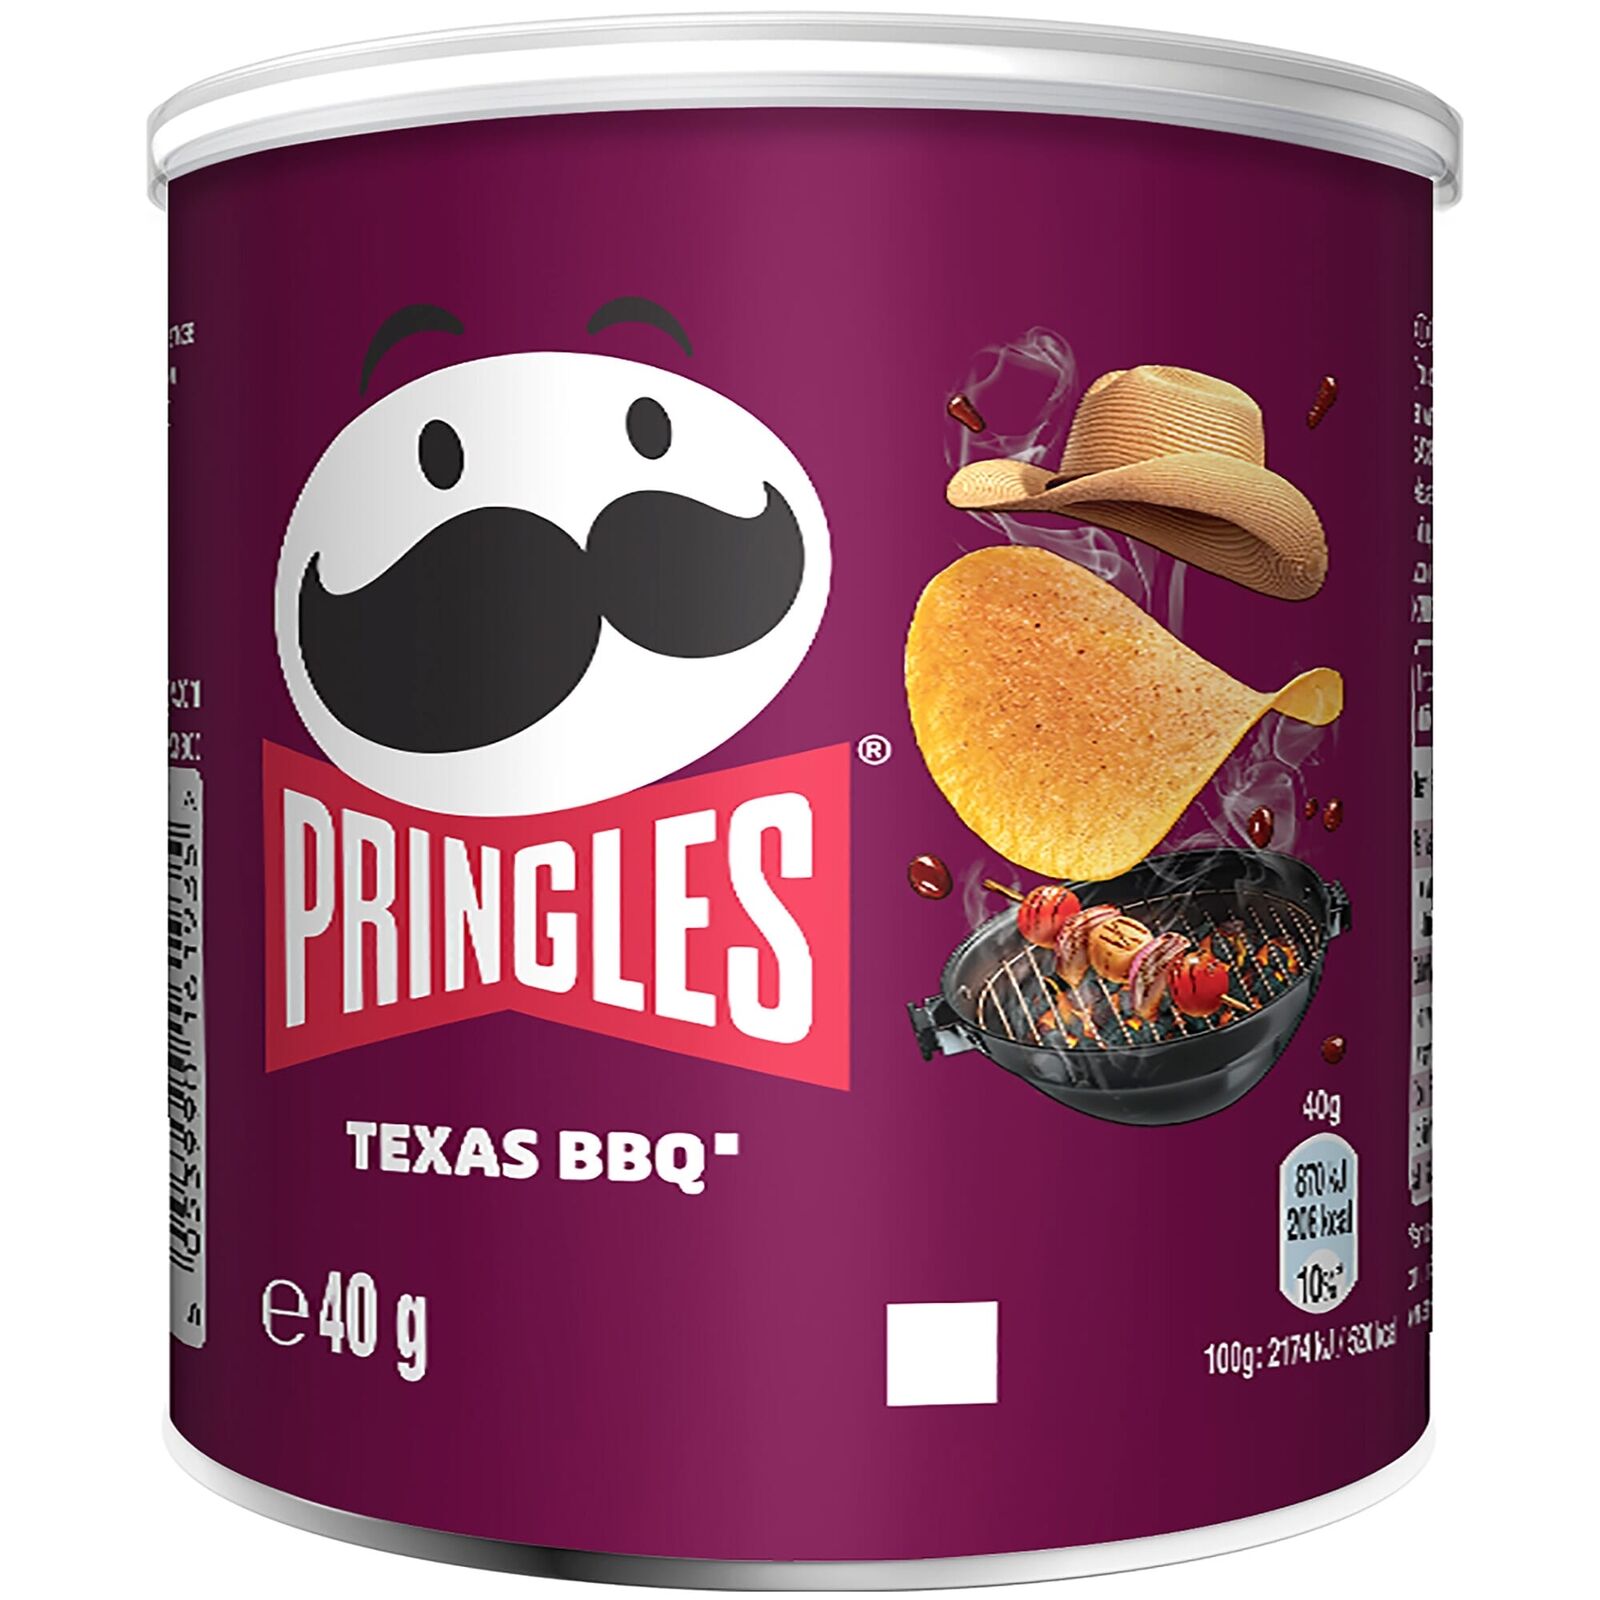 Pringles Texas BBQ sauce SaveCo Online Ltd